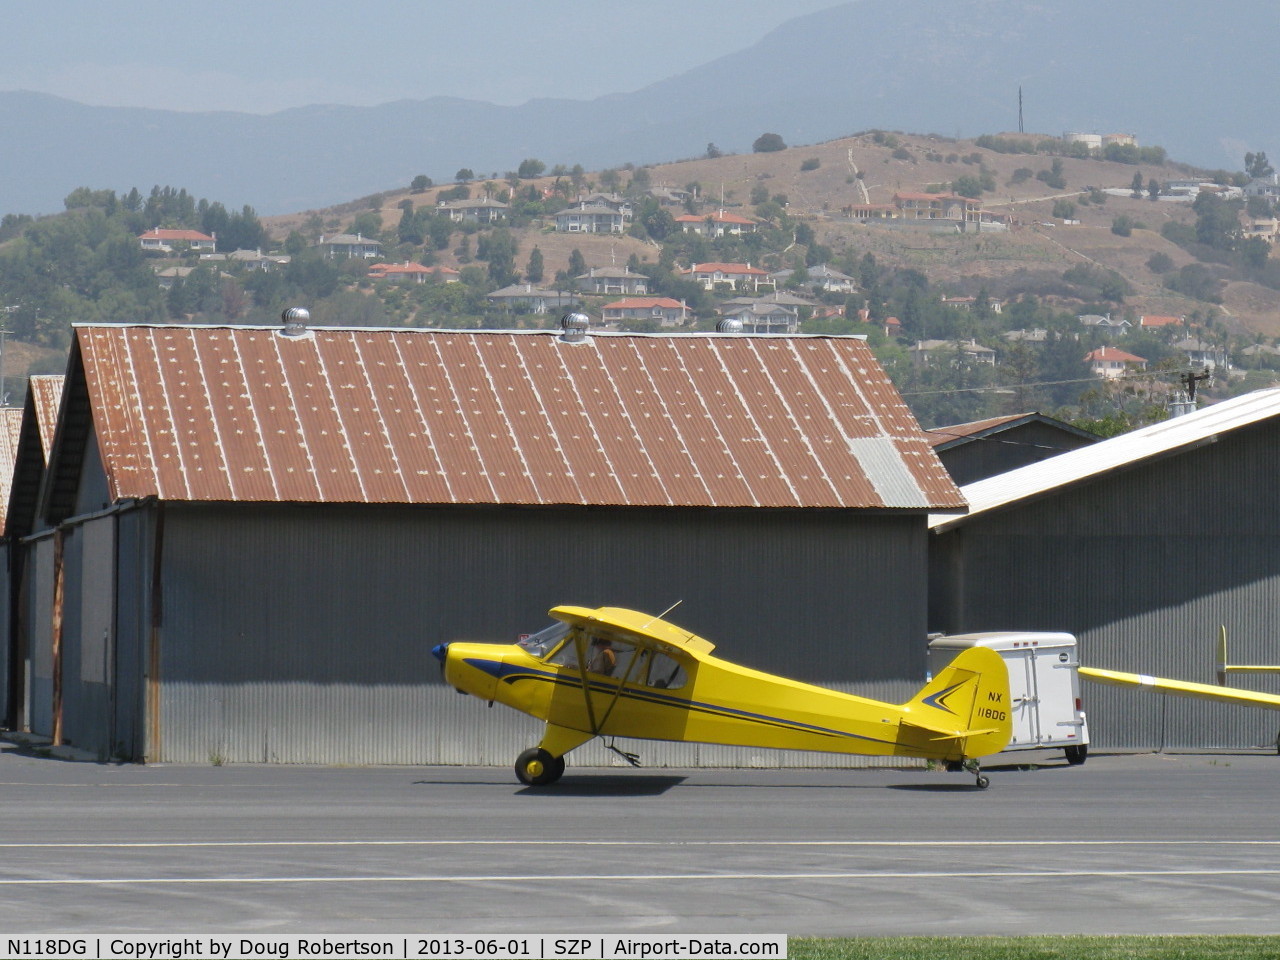 N118DG, 2008 Piper PA-18 Replica C/N 001, 2008 Ganzer XPA18, Continental O-200 100 Hp, taxi after landing Rwy 22